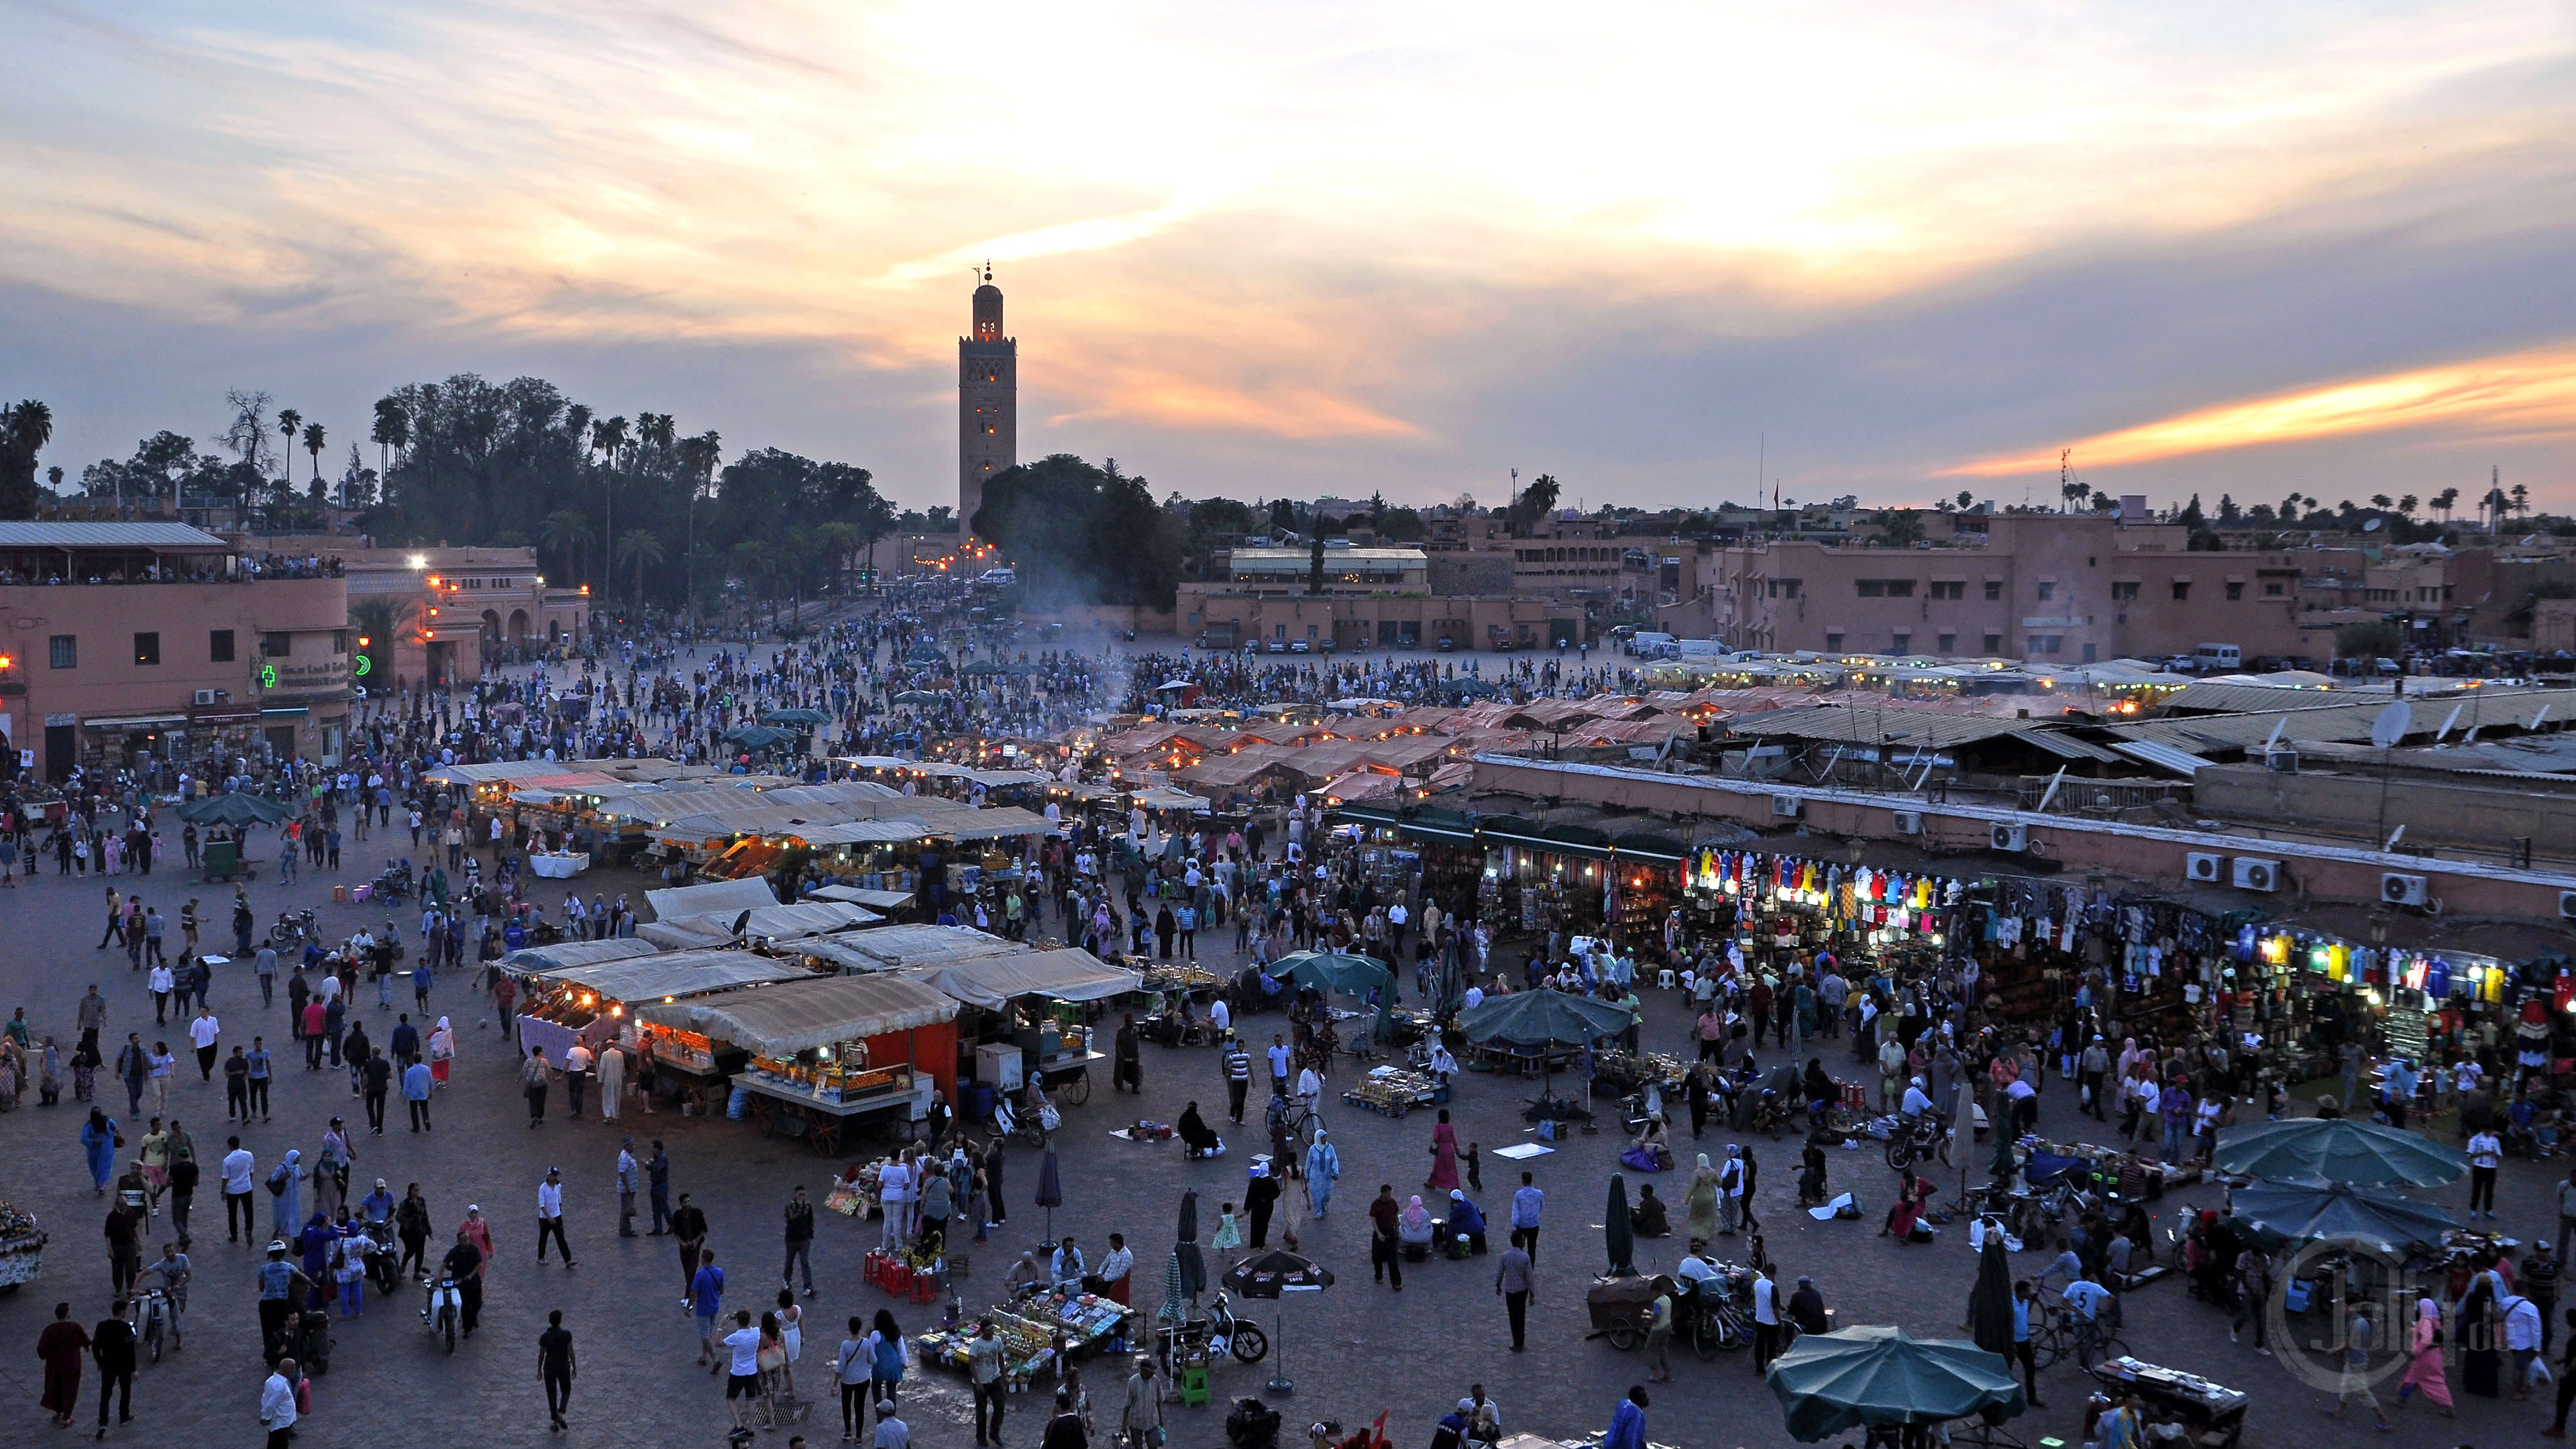 Djemaa el Fna's allure, Nighttime wonders, Marokko's charm, Marrakech's magic, 3840x2160 4K Desktop